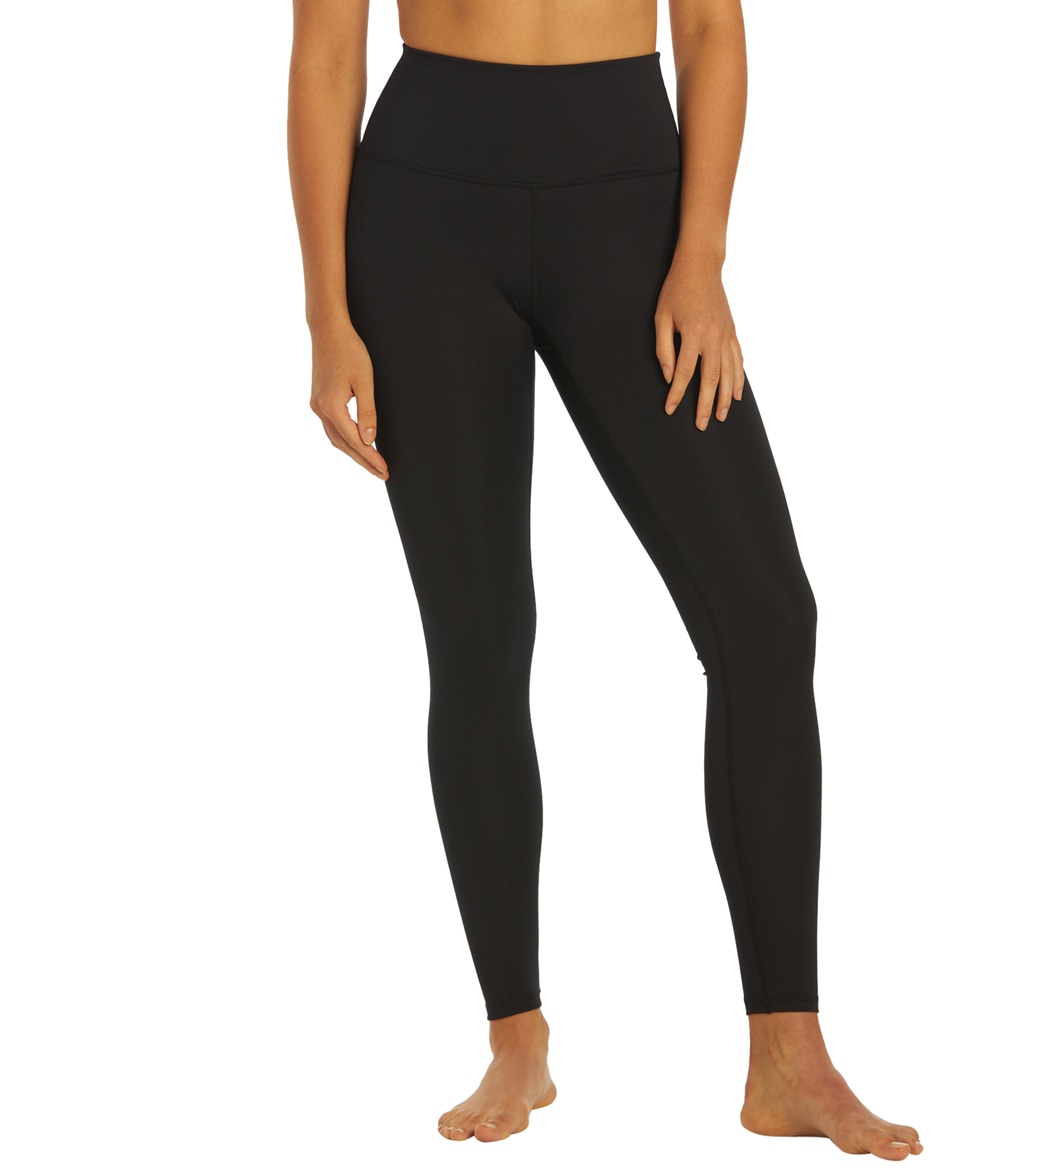 TYR Women's Hi-Rise Leggings - Black Large - Swimoutlet.com